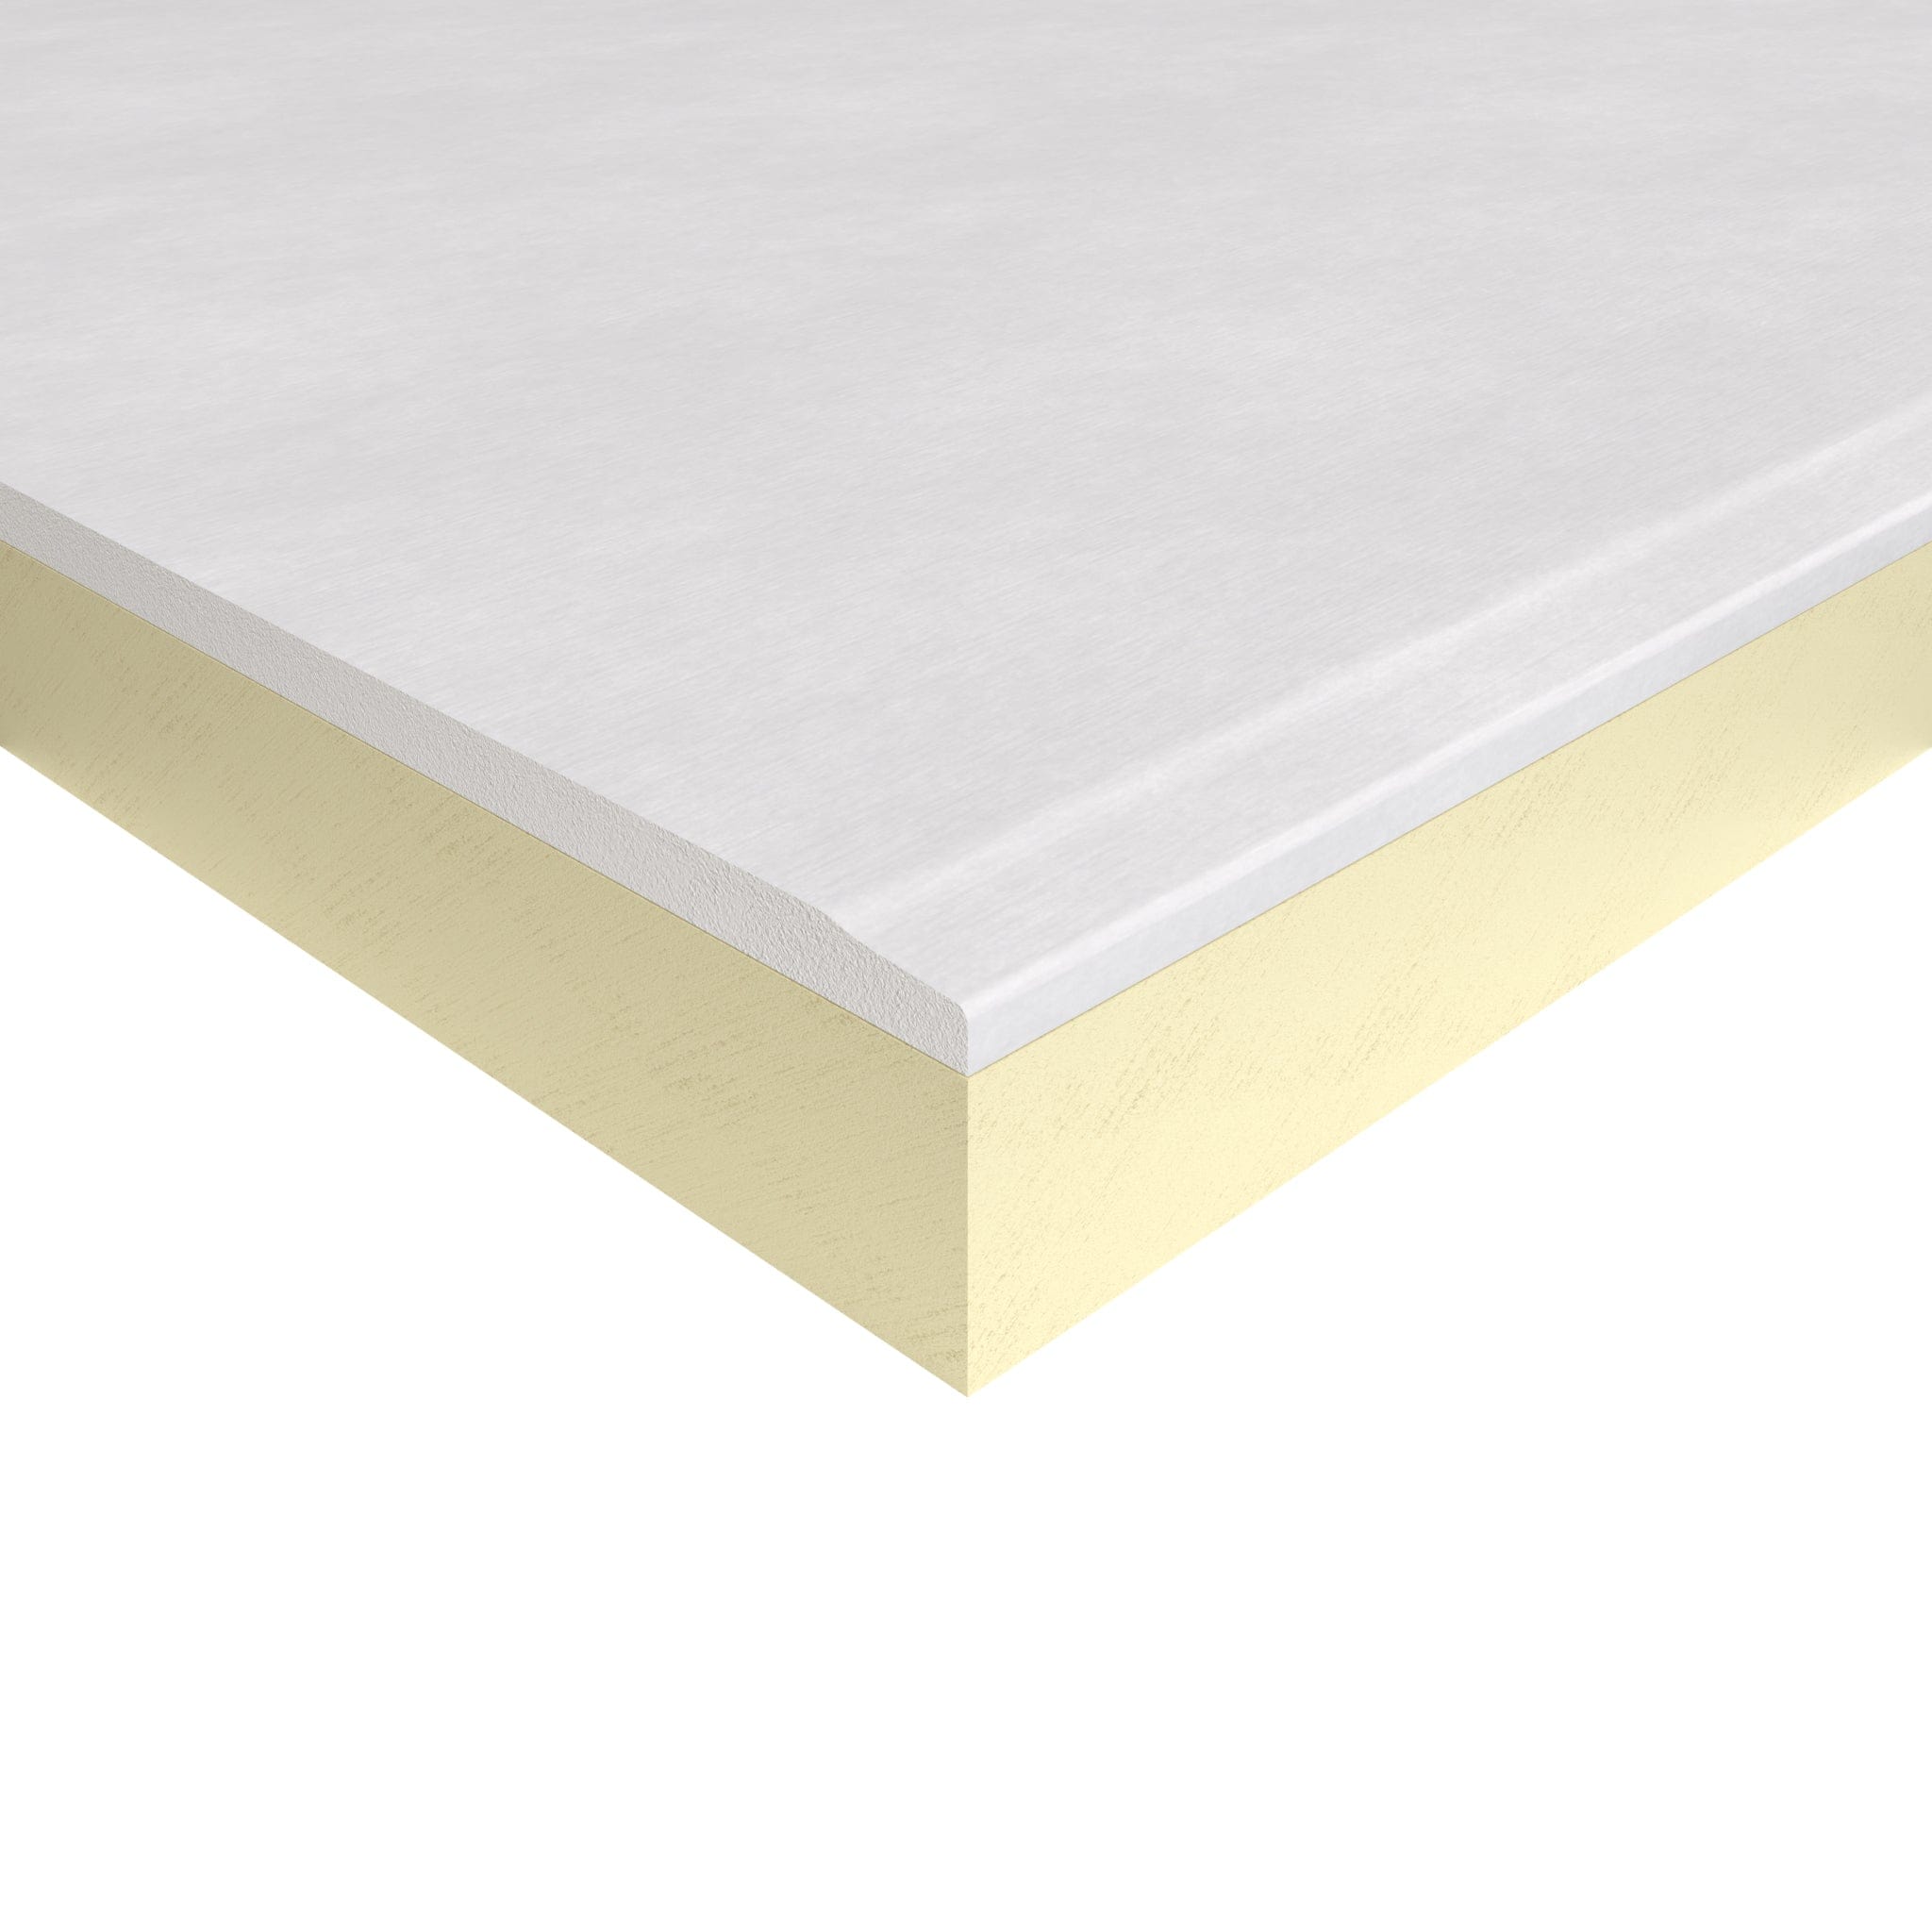 Tekwarm Insulation 29.5mm Tekwarm PIR Insulated Plasterboard | 2400 x 1200mm BM02033 Tekwarm PIR Insulated Plasterboard - Thermal Laminate 2400mm x 1200mm